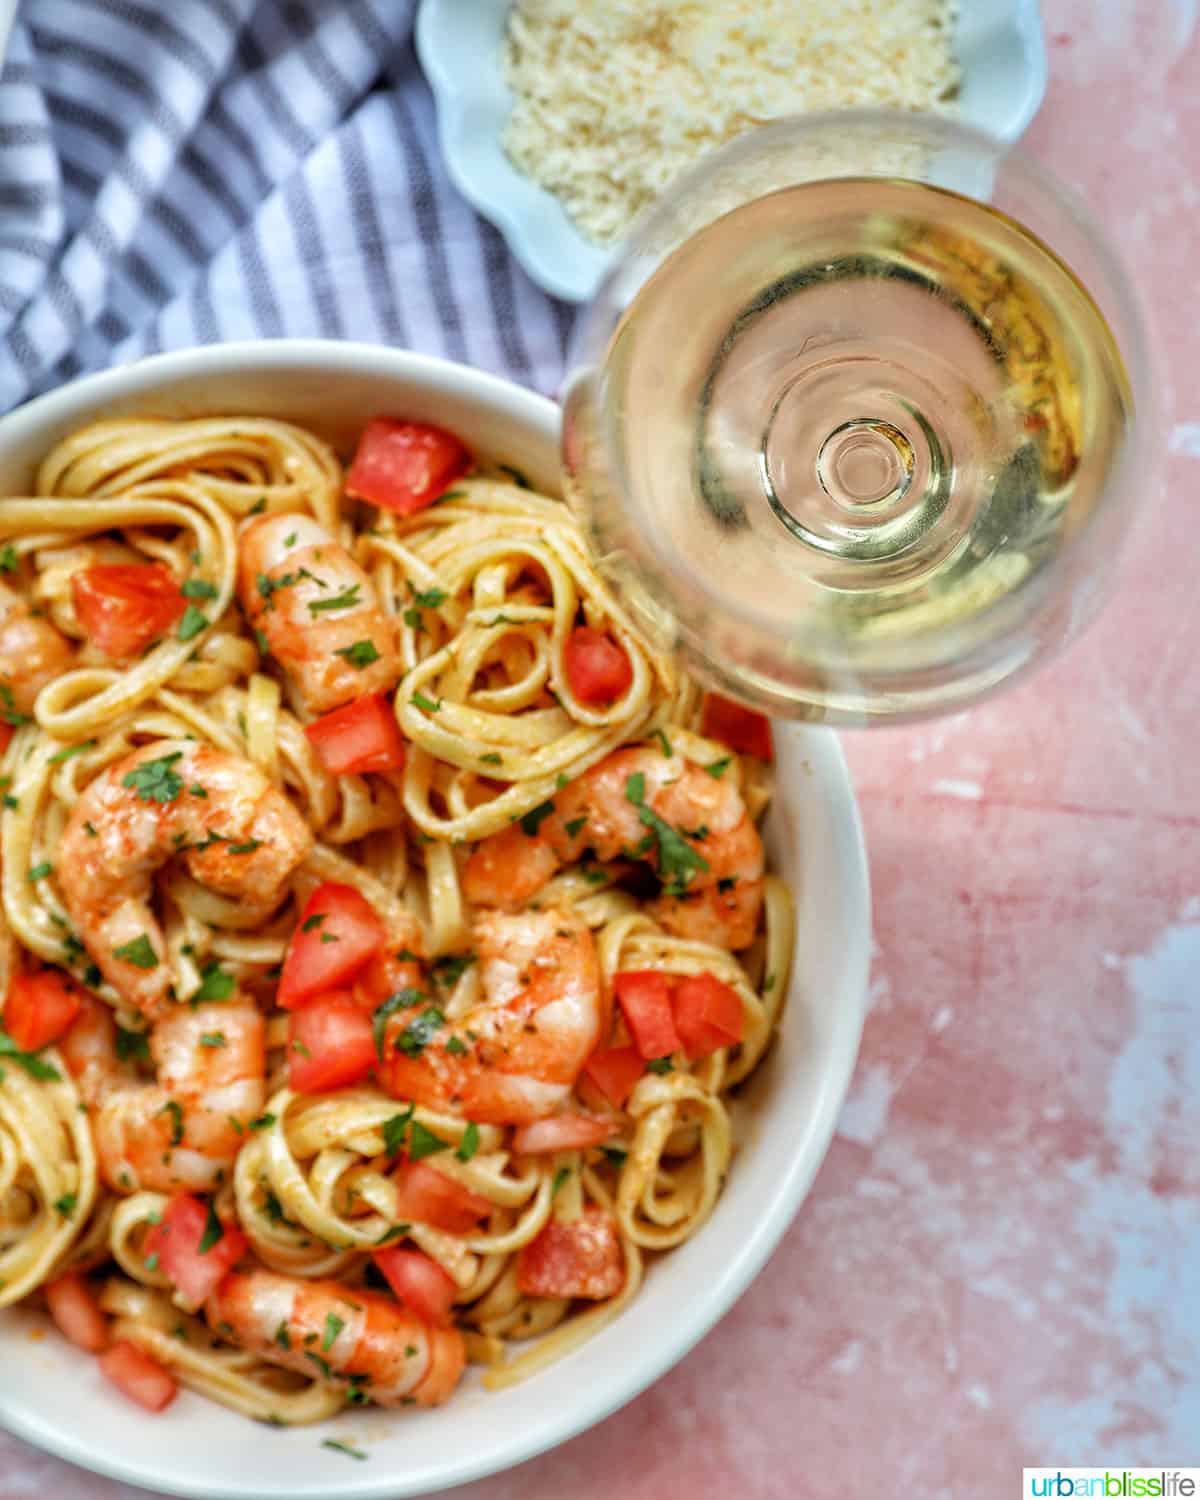 Cajun Shrimp Pasta with glass of white wine.